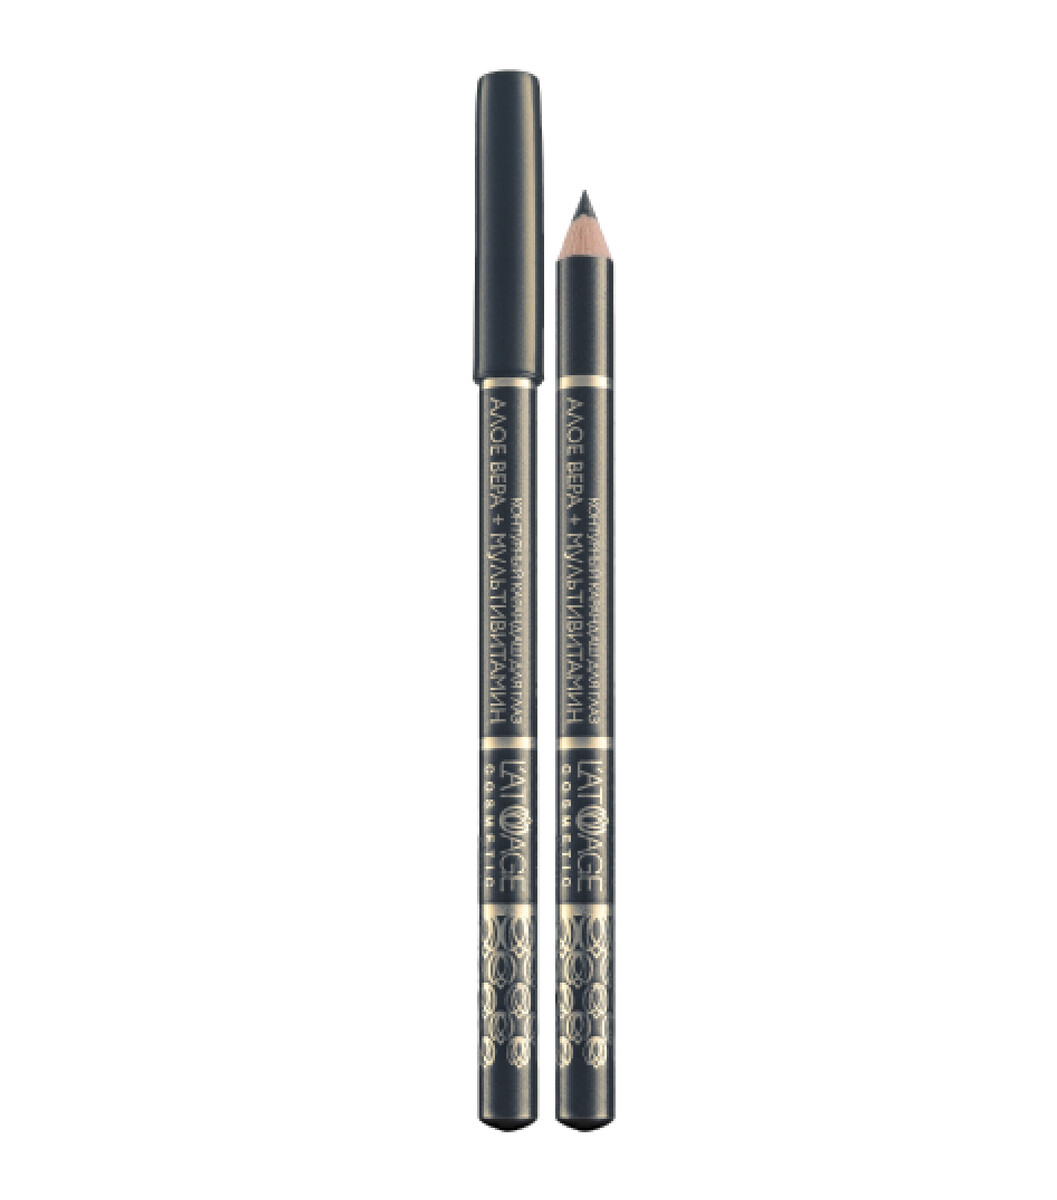 Контурный карандаш для глаз latuage cosmetic №43 (серо-черный) контурный карандаш для бровей latuage cosmetic 06 тауп